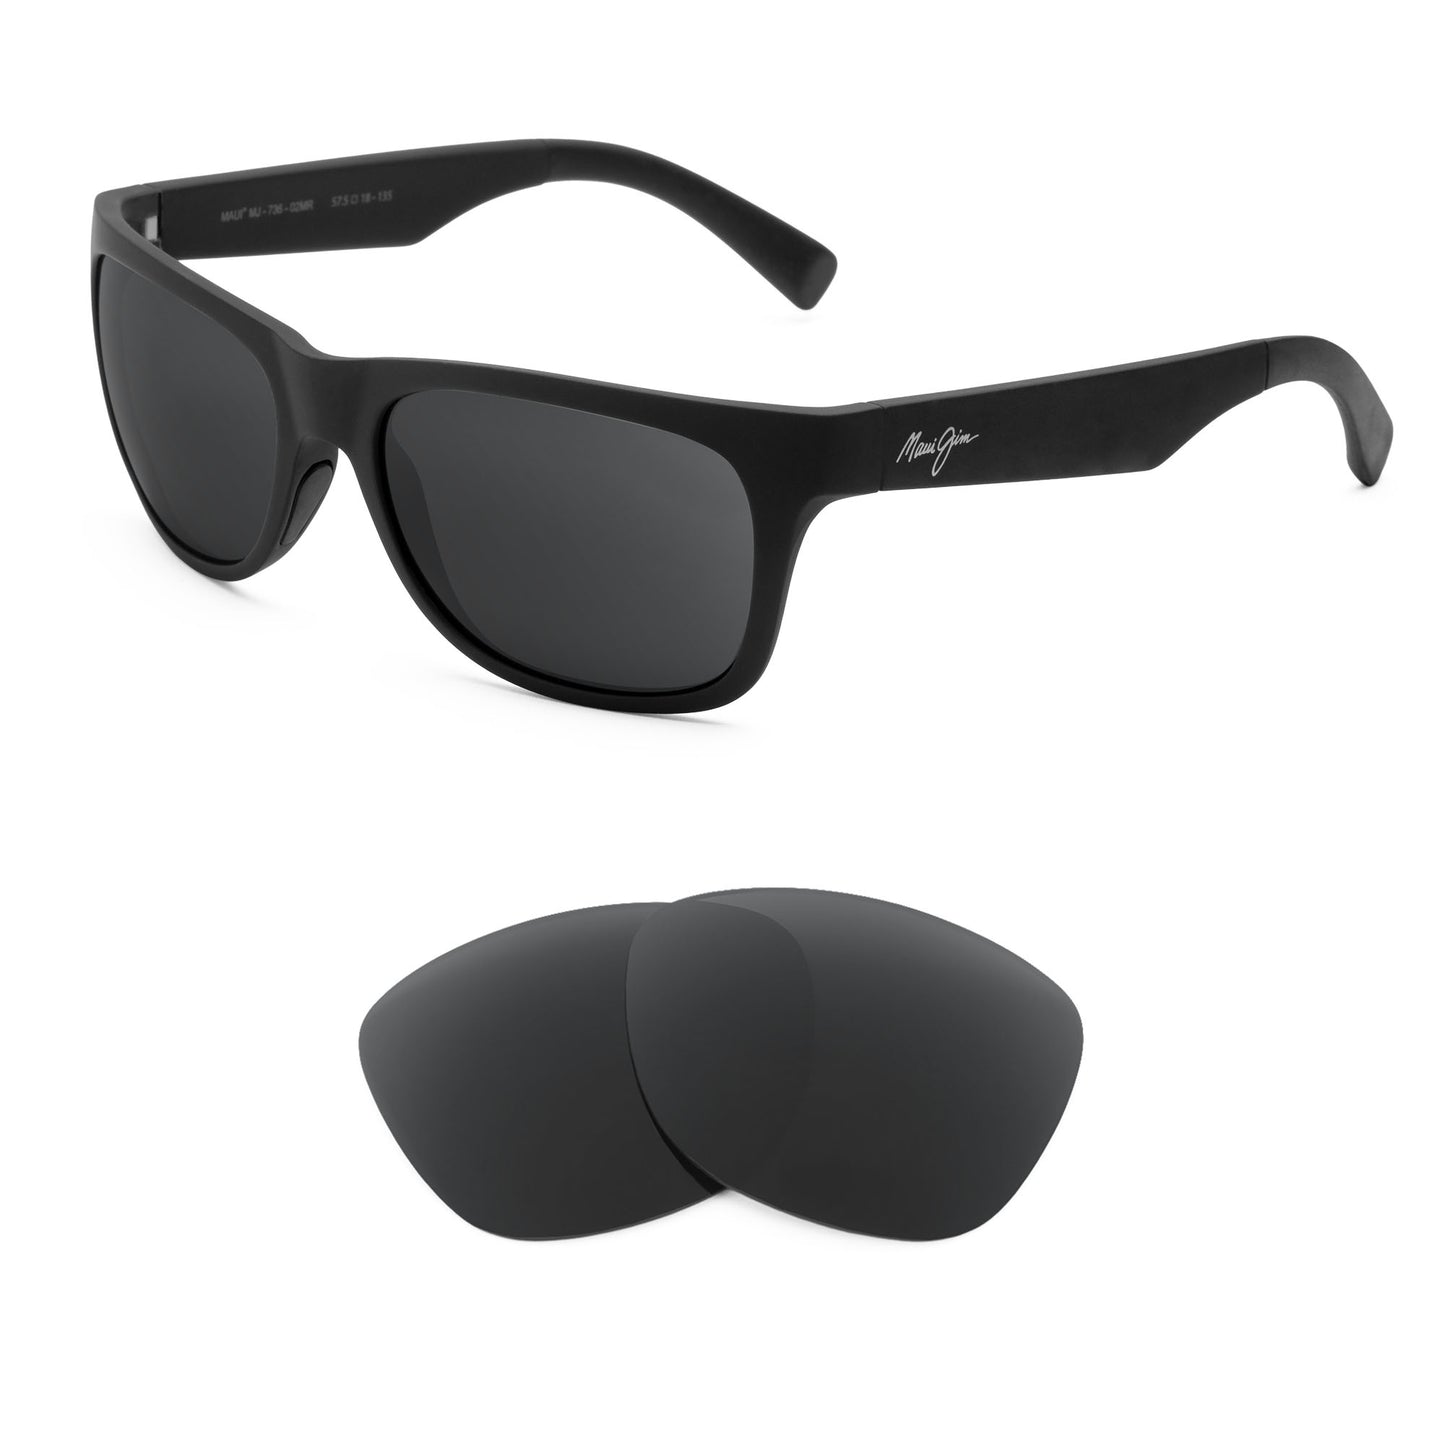 Maui Jim Kahi sunglasses with replacement lenses